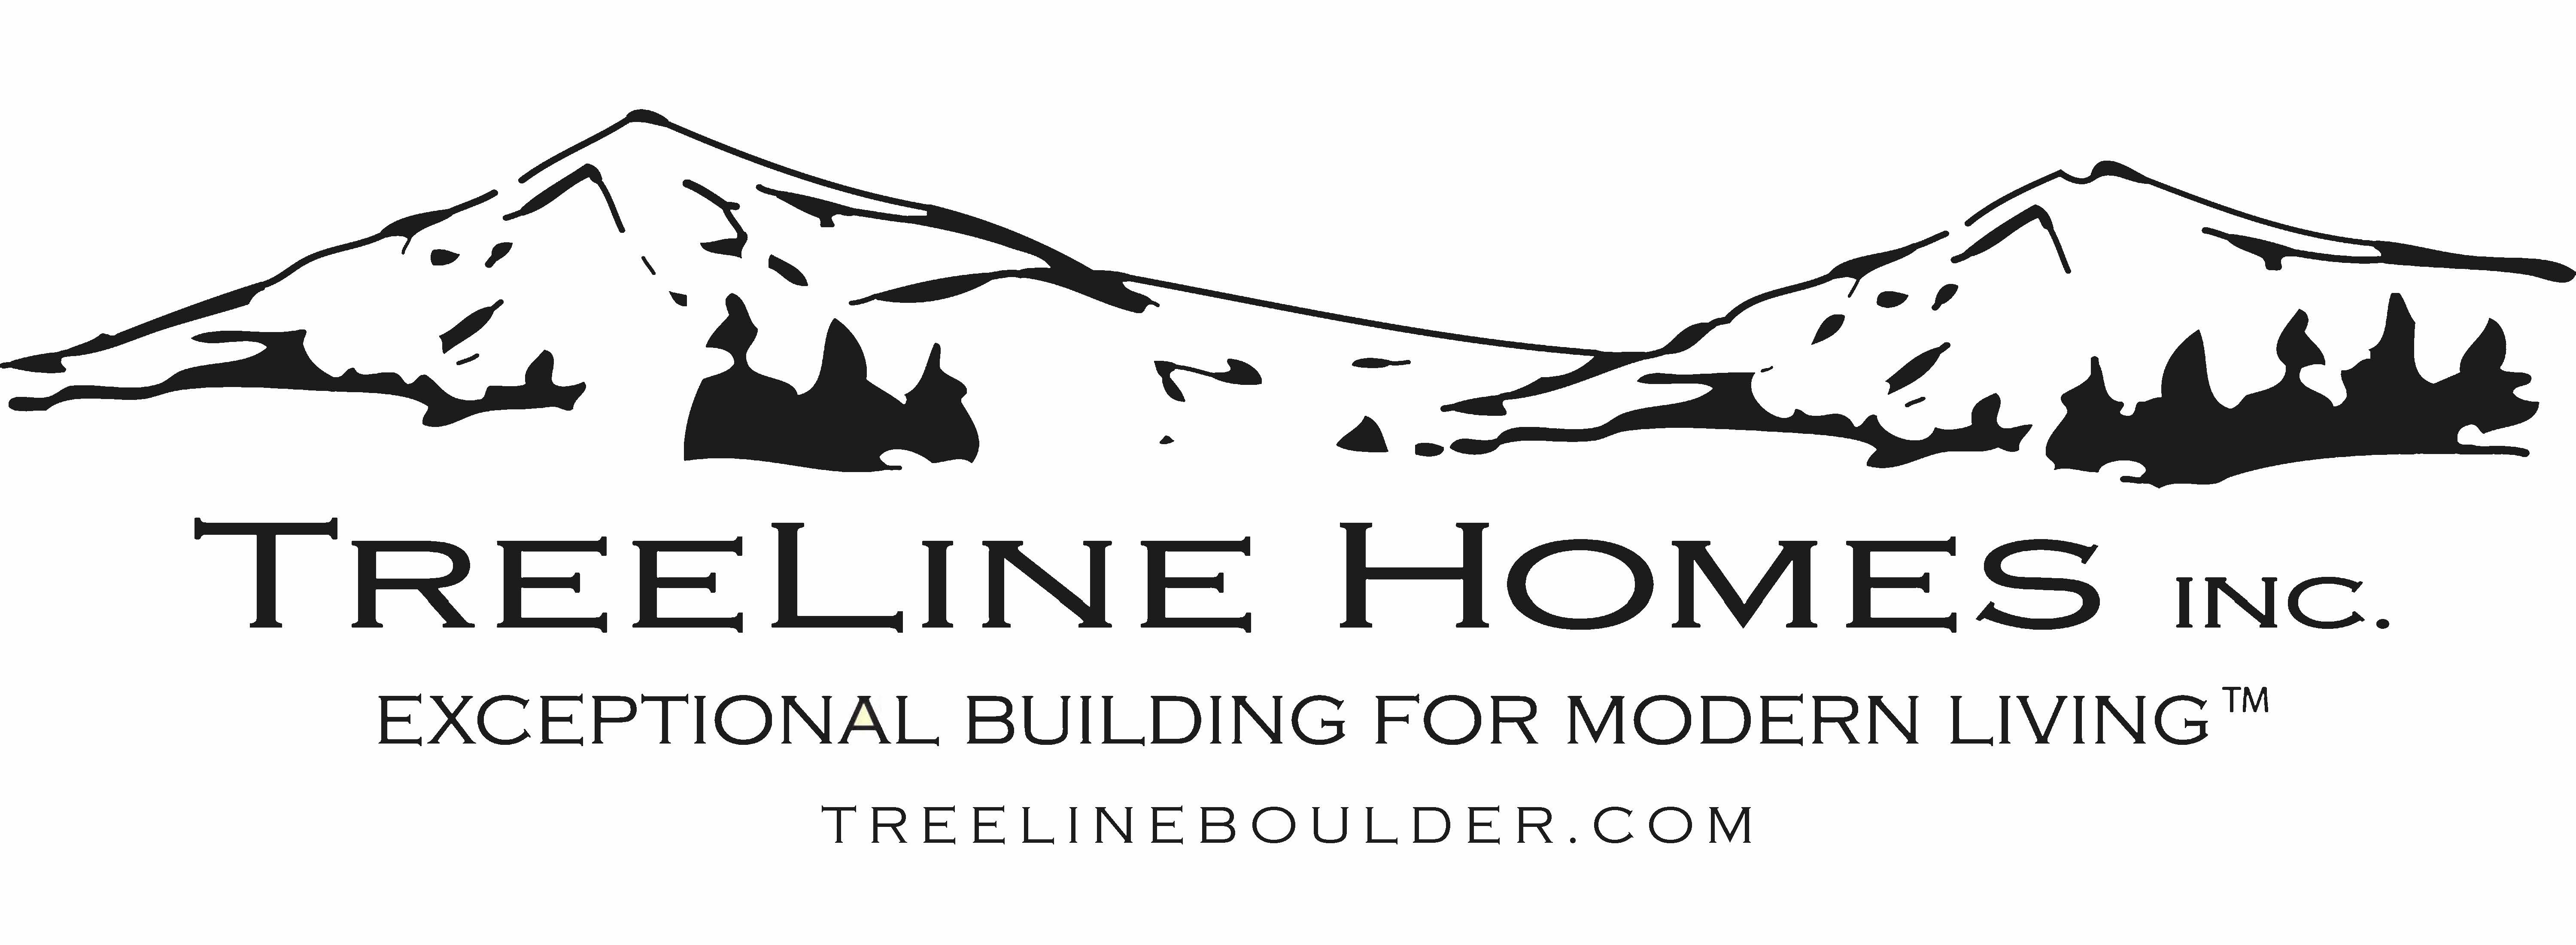 Treeline Homes, Inc. company logo